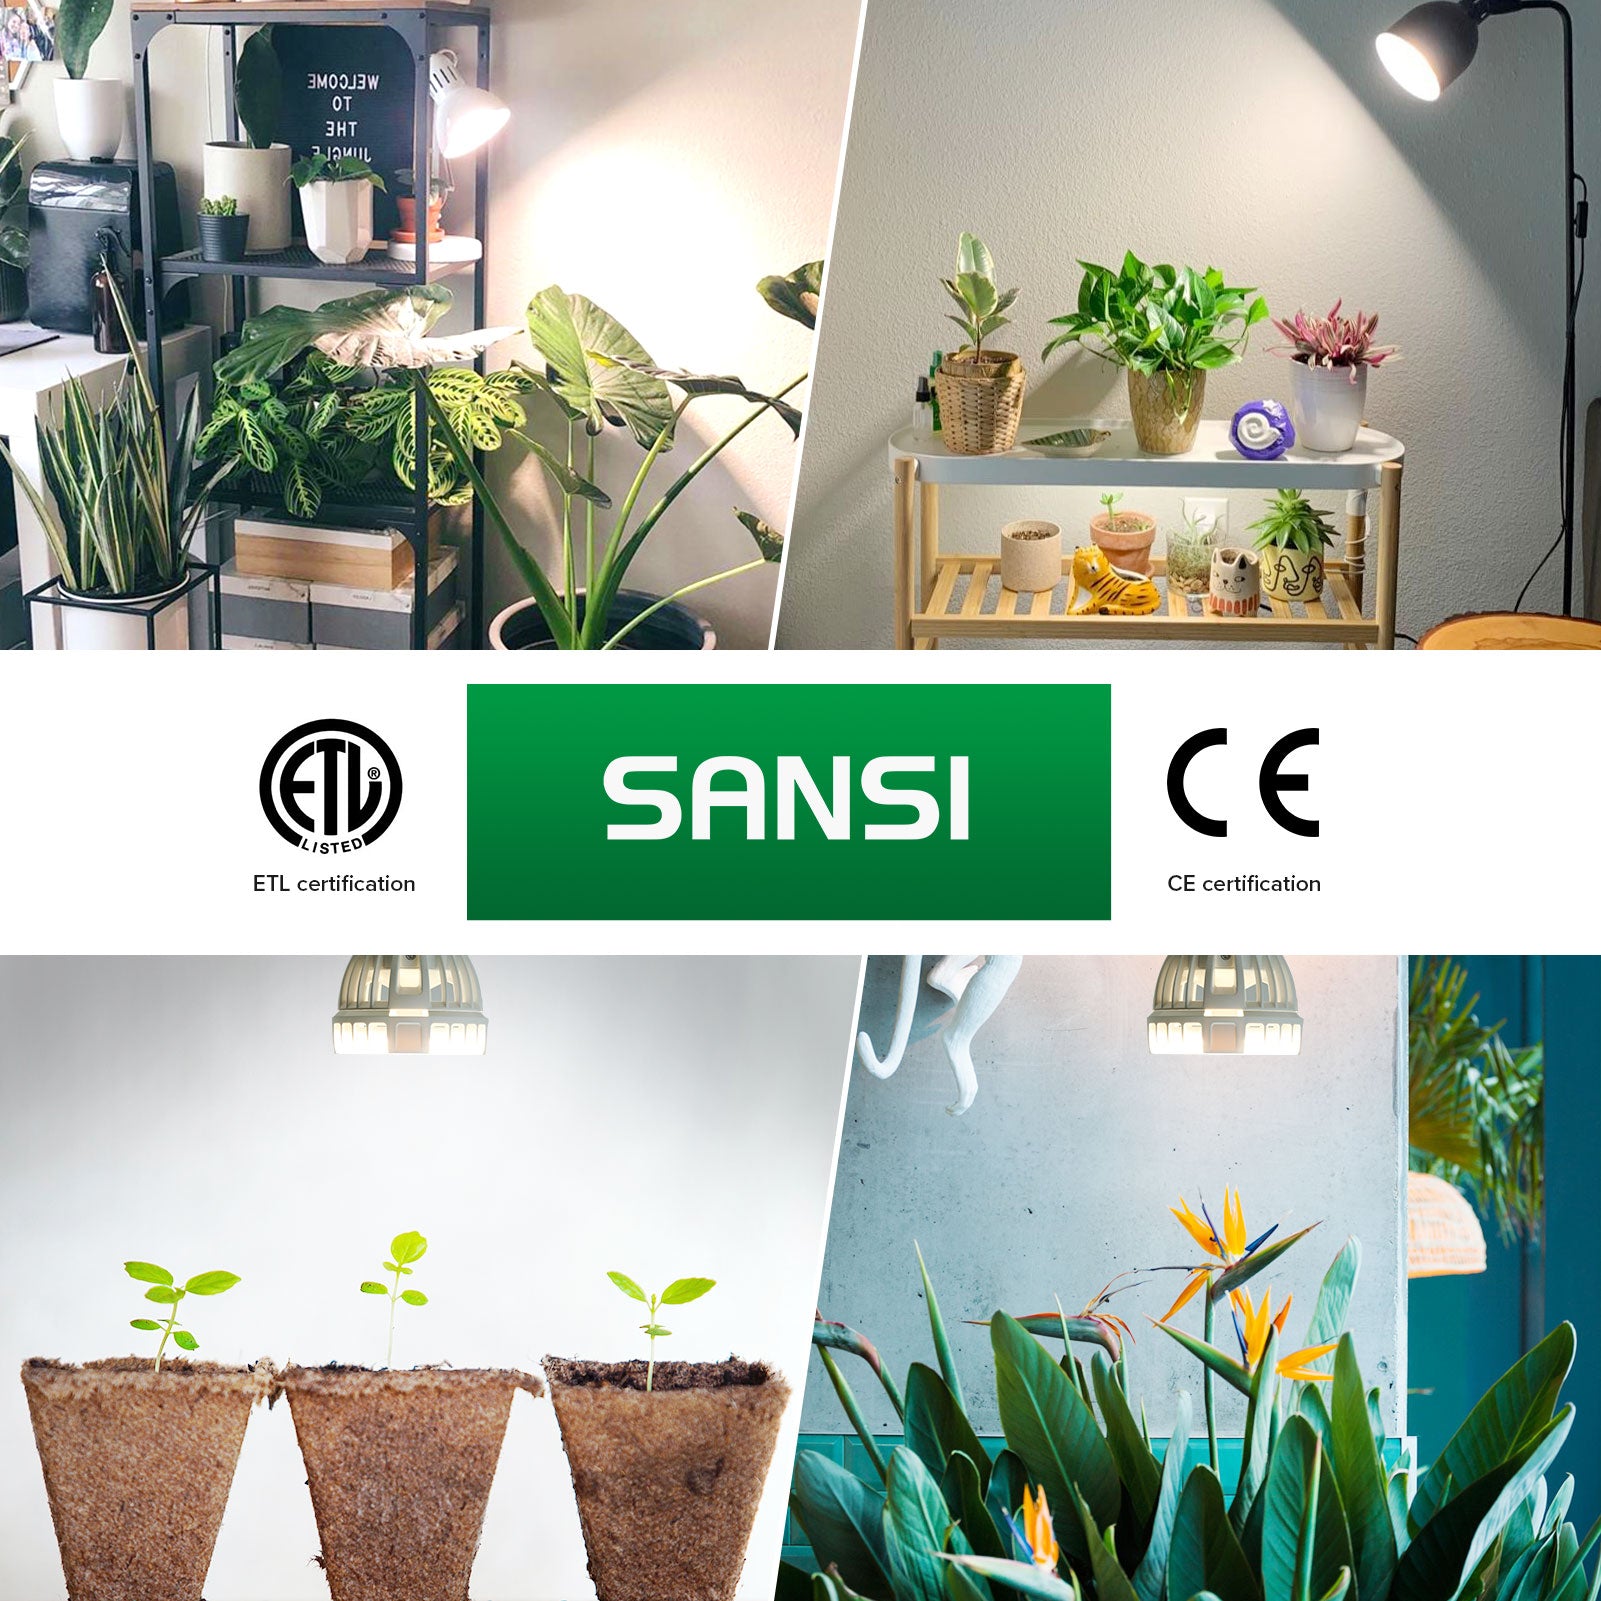 15W led grow light bulb, suitable for medium light indoor plants has ETL and CE certification